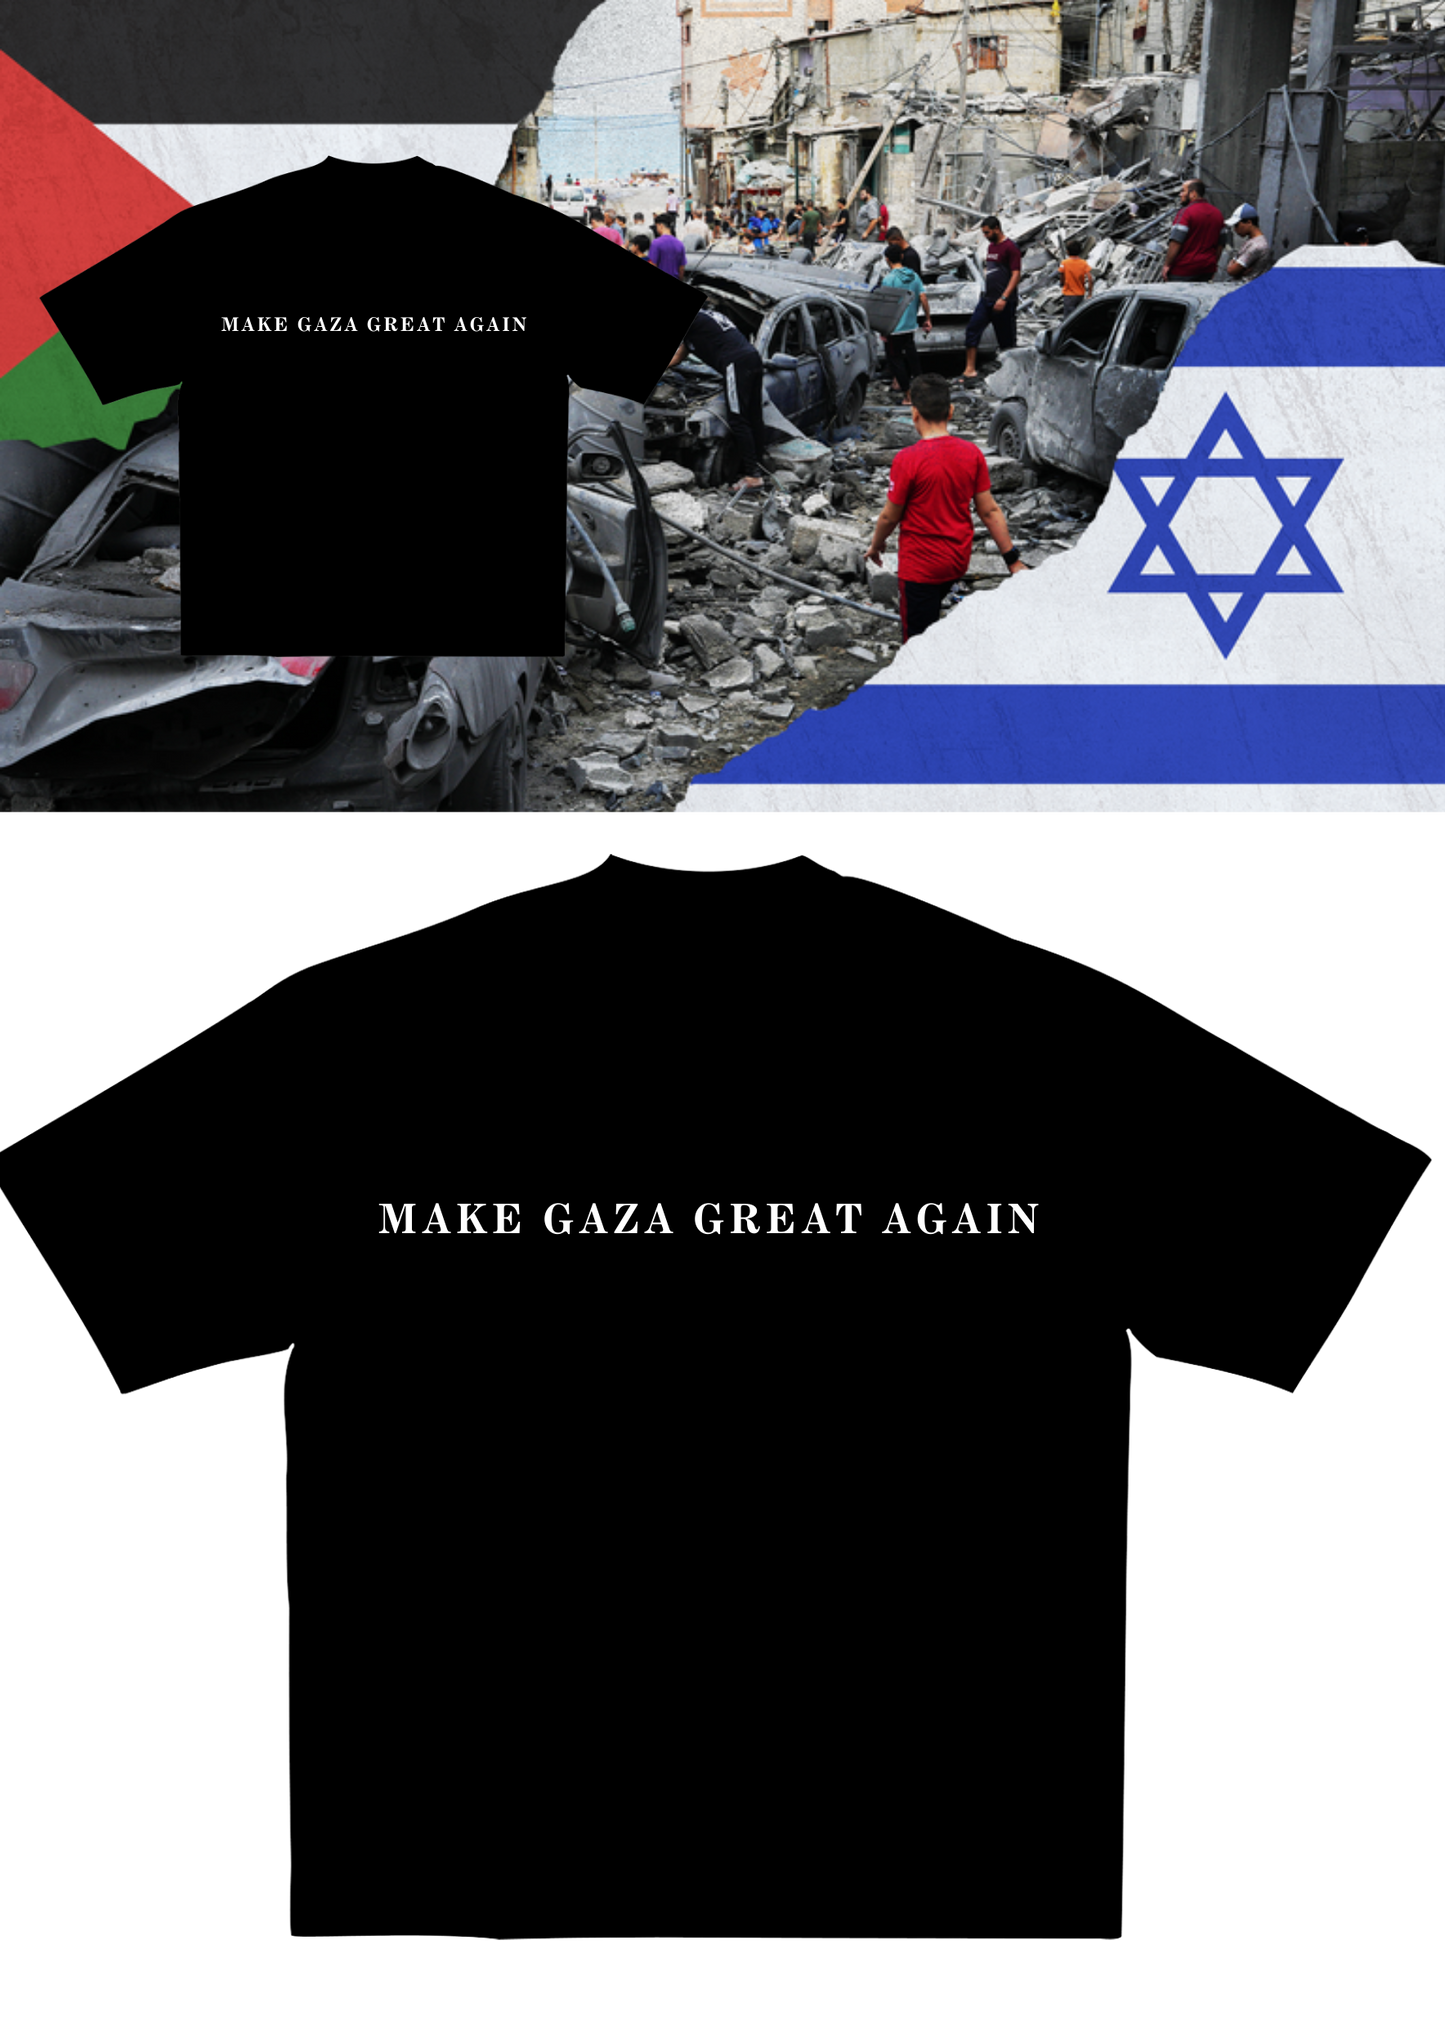 MAKE GAZA GREAT AGAIN by SOLJAH KULTURE (TSHIRT)